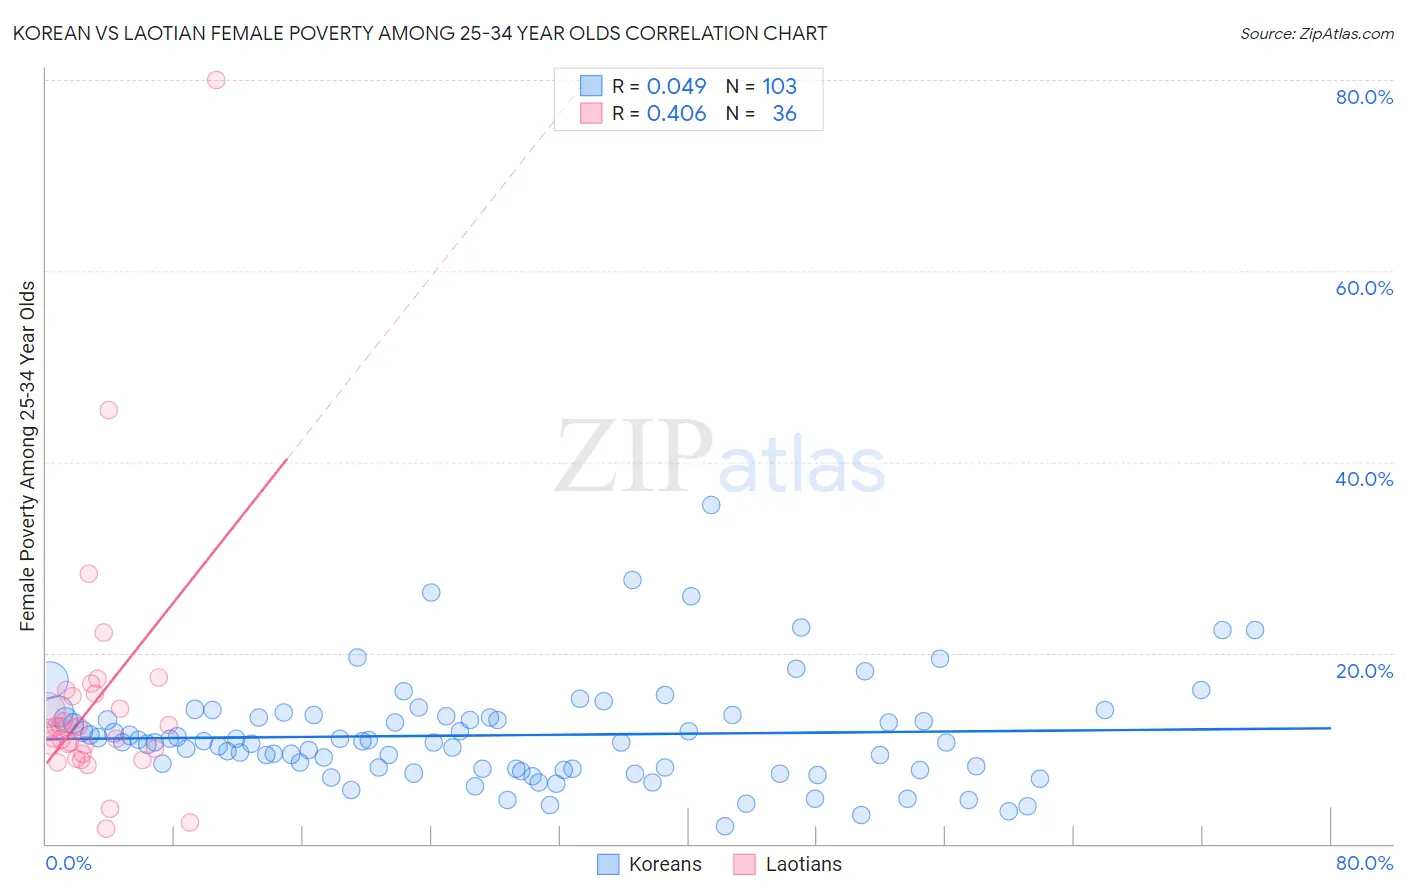 Korean vs Laotian Female Poverty Among 25-34 Year Olds